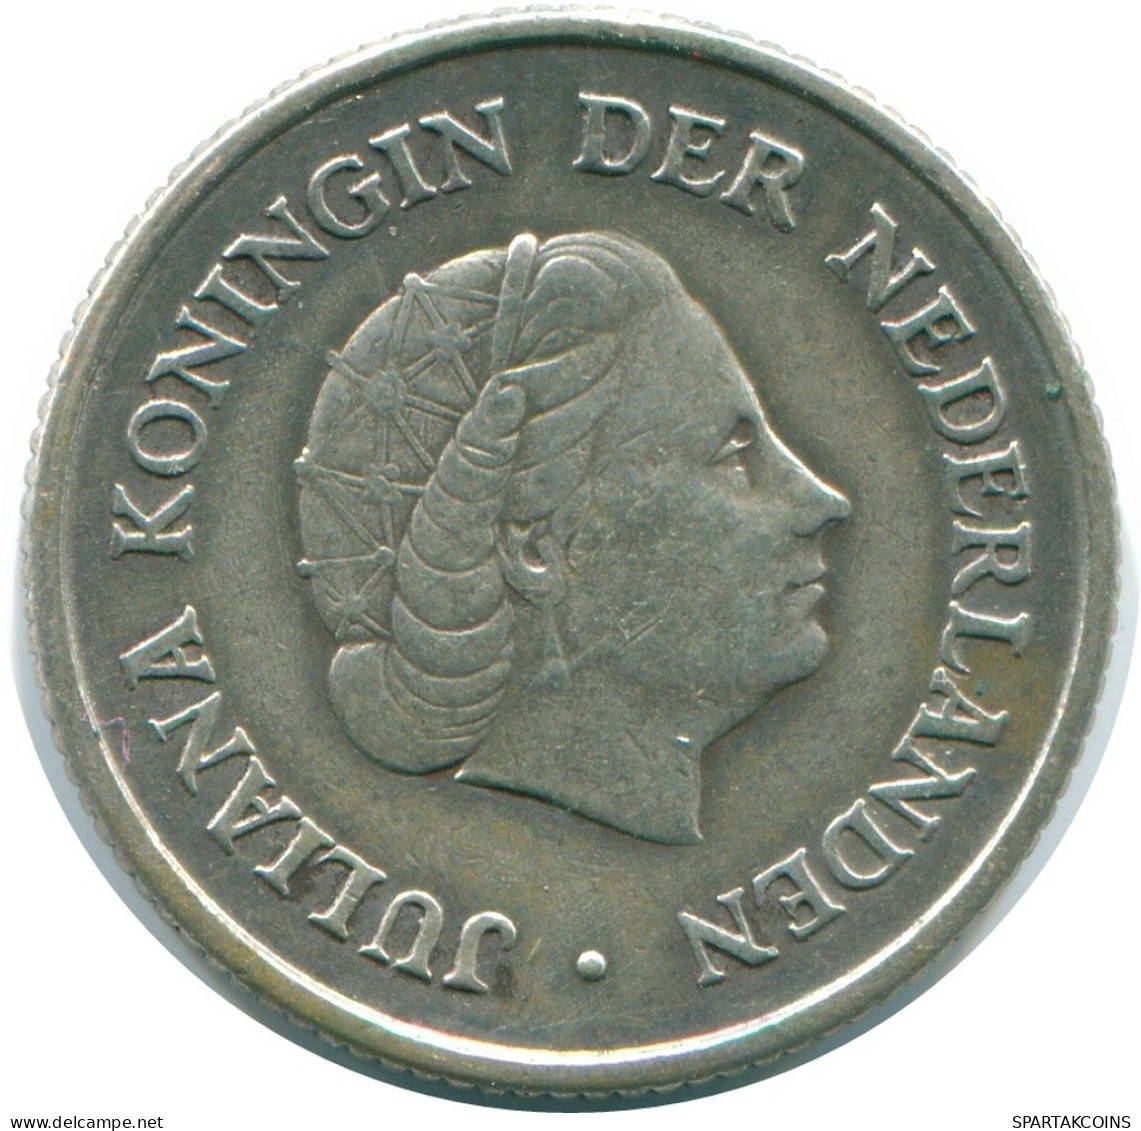 1/4 GULDEN 1962 NETHERLANDS ANTILLES SILVER Colonial Coin #NL11167.4.U.A - Antillas Neerlandesas